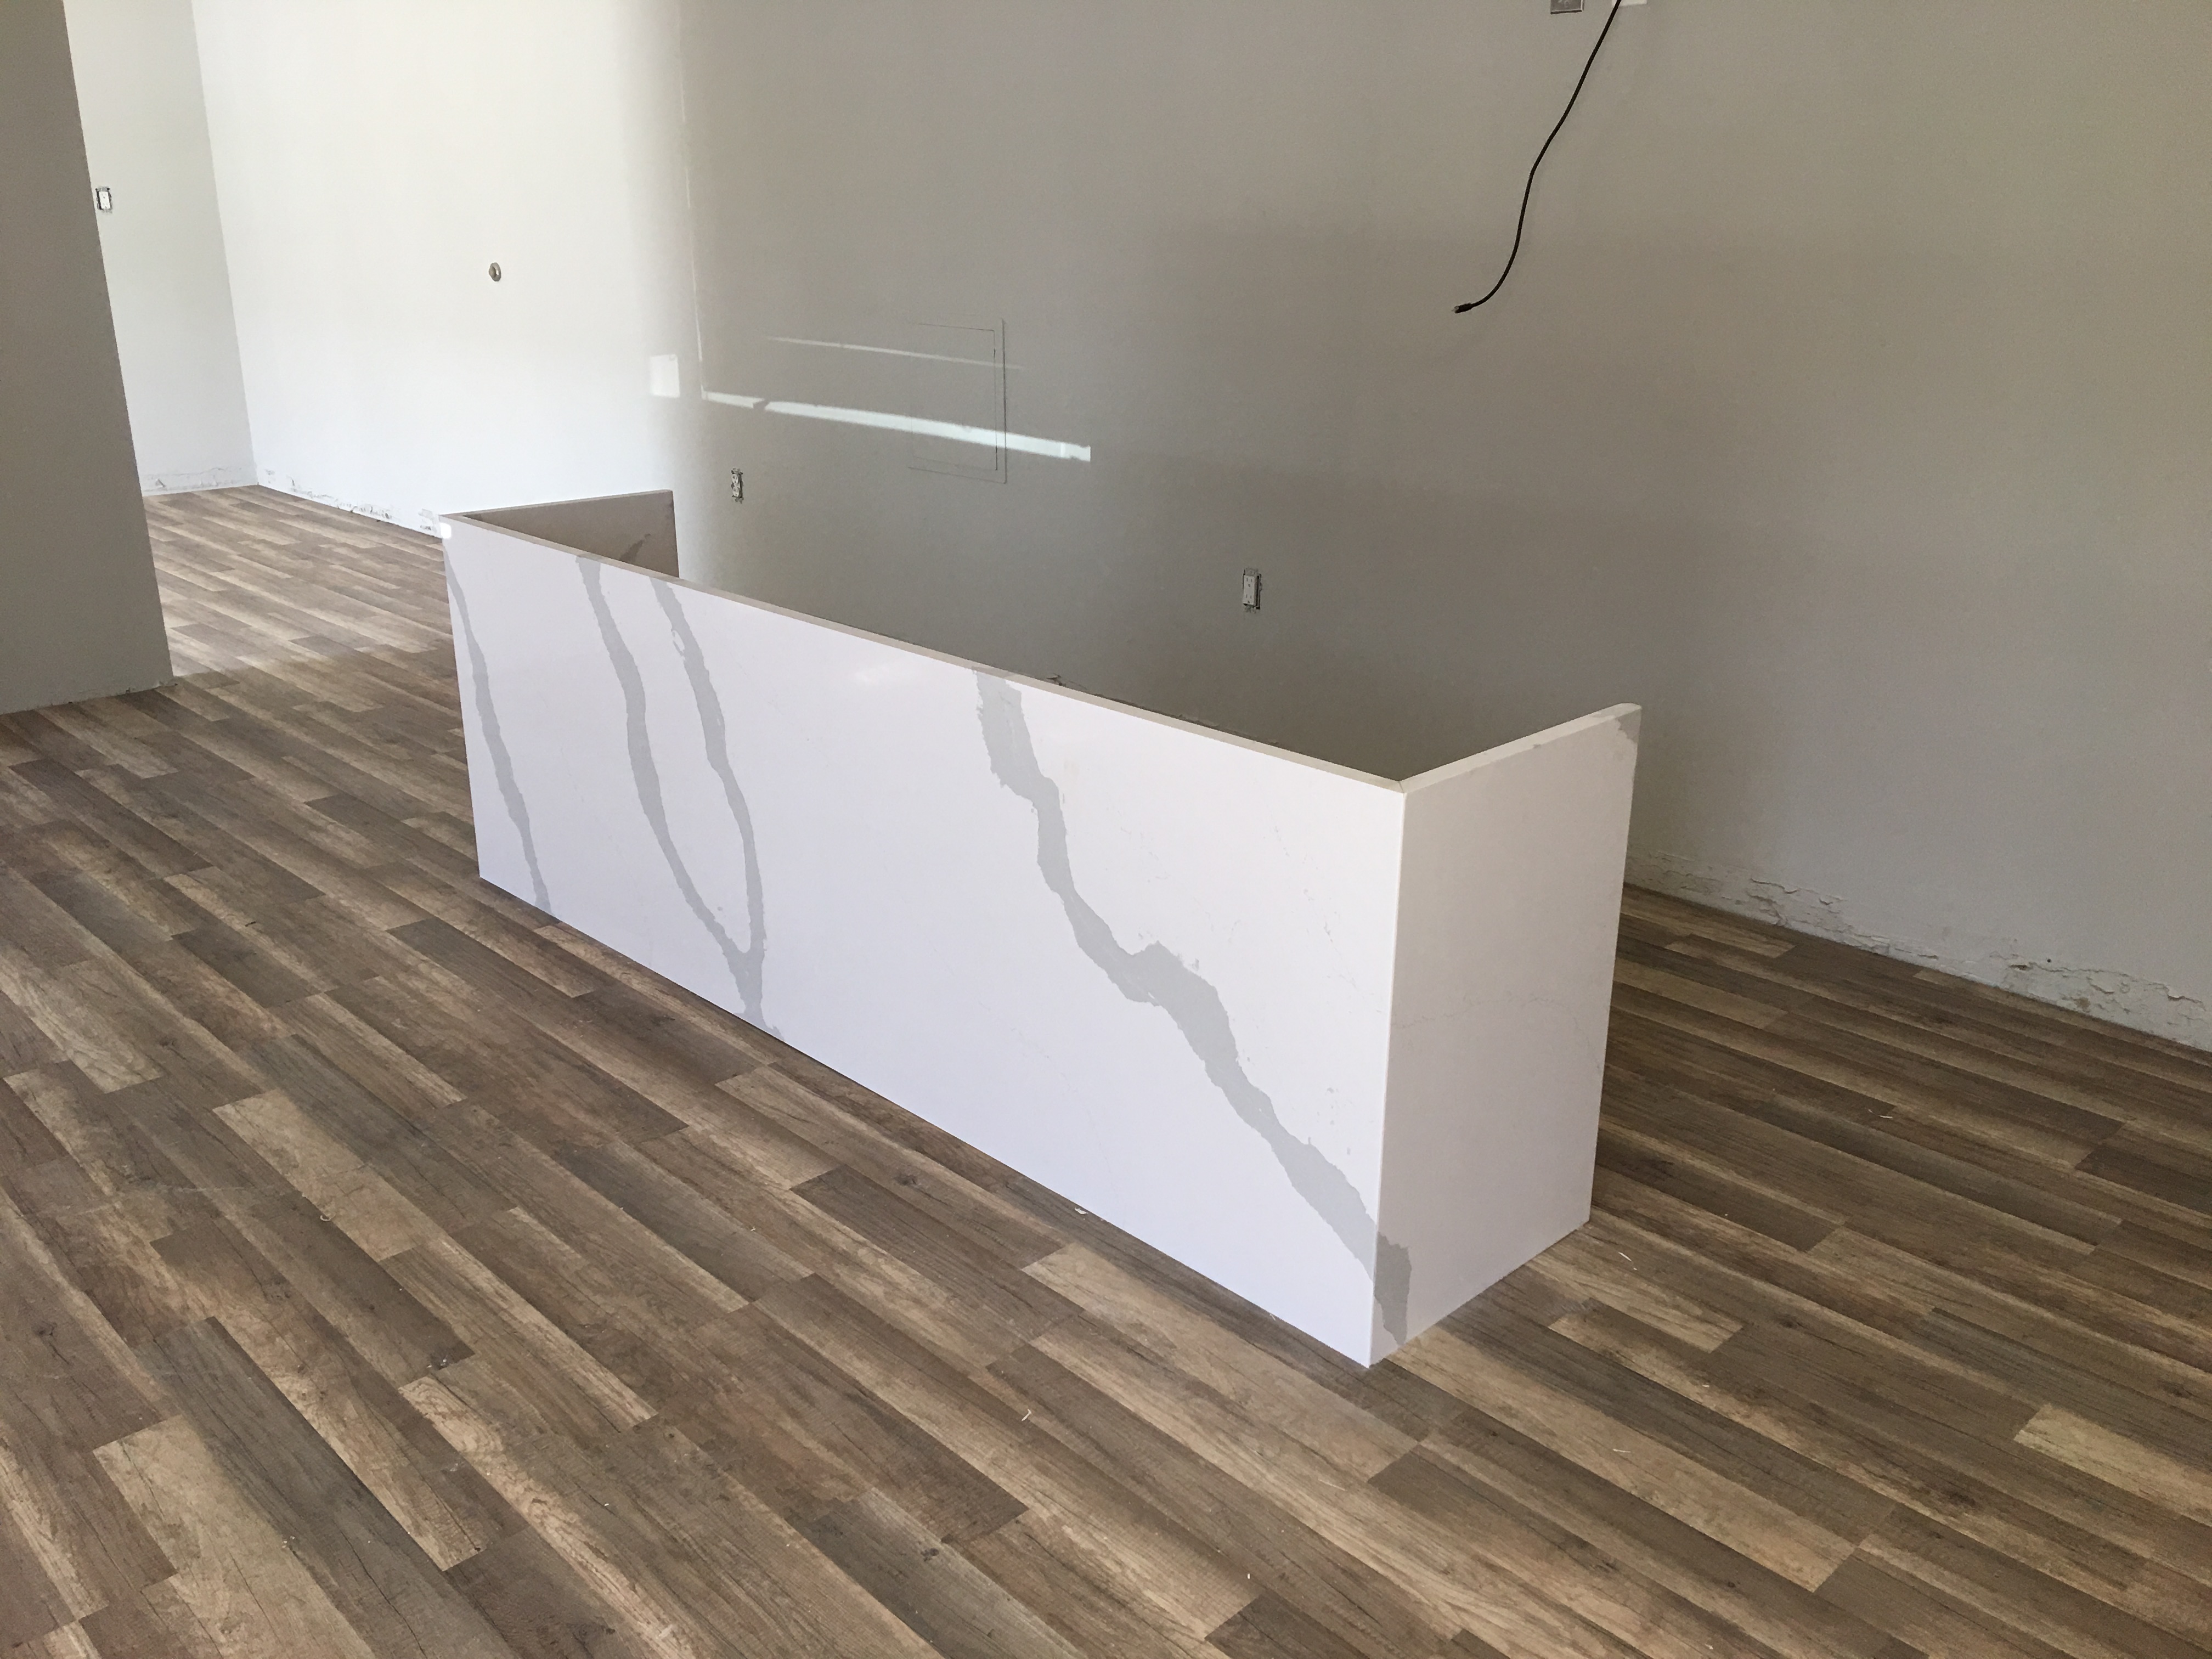 Erva Stone Cabinet Warehouse Front Desk